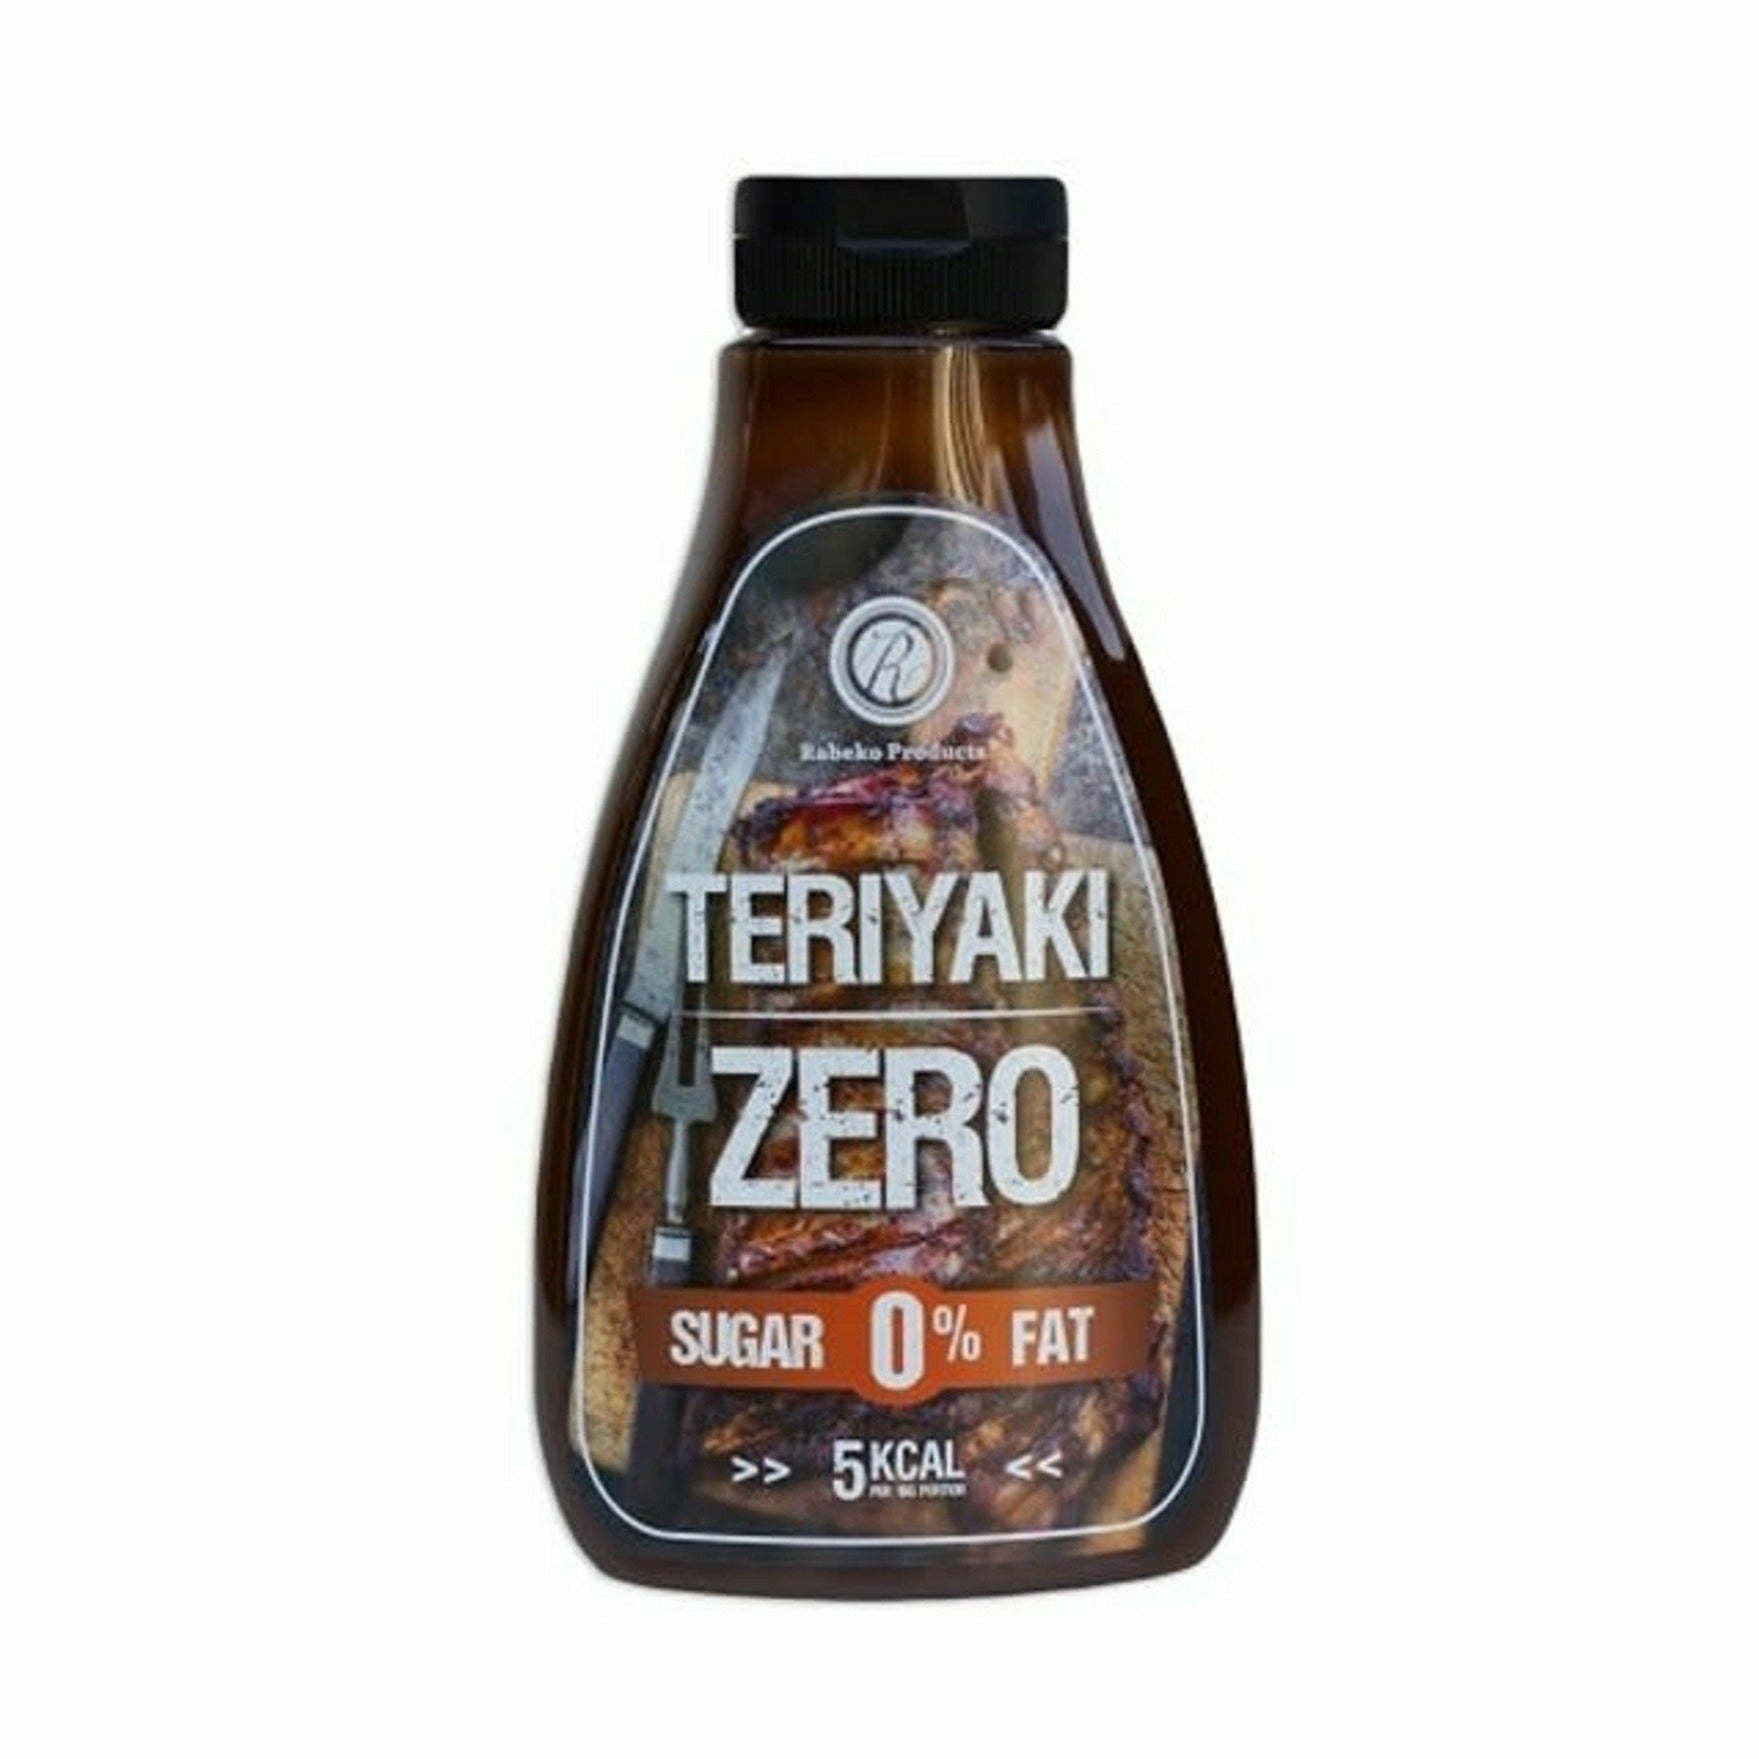 Rabeko Zero Sugar Low Cal Sauces Teriyaki Rabeko